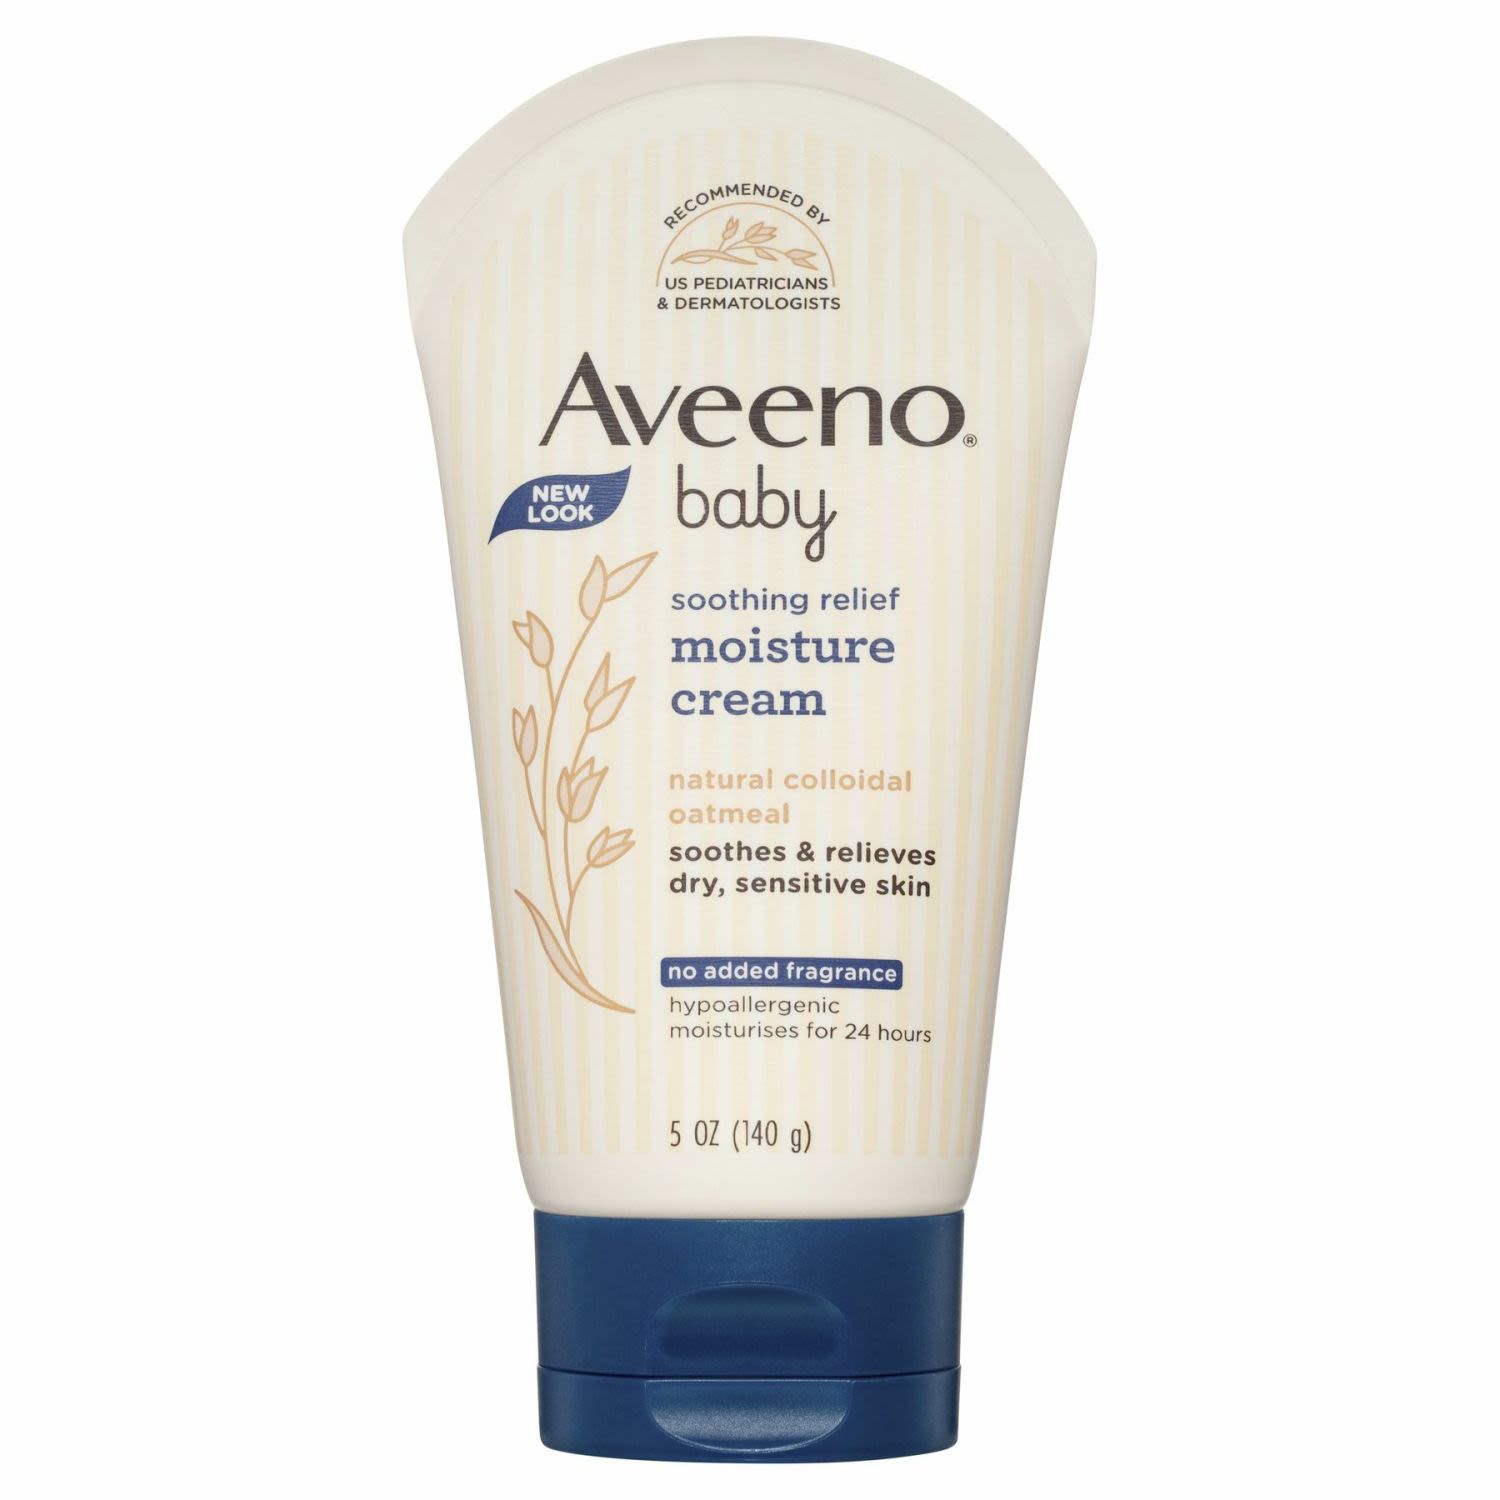 Aveeno Baby Soothing Relief Moisture Cream, 140 Gram